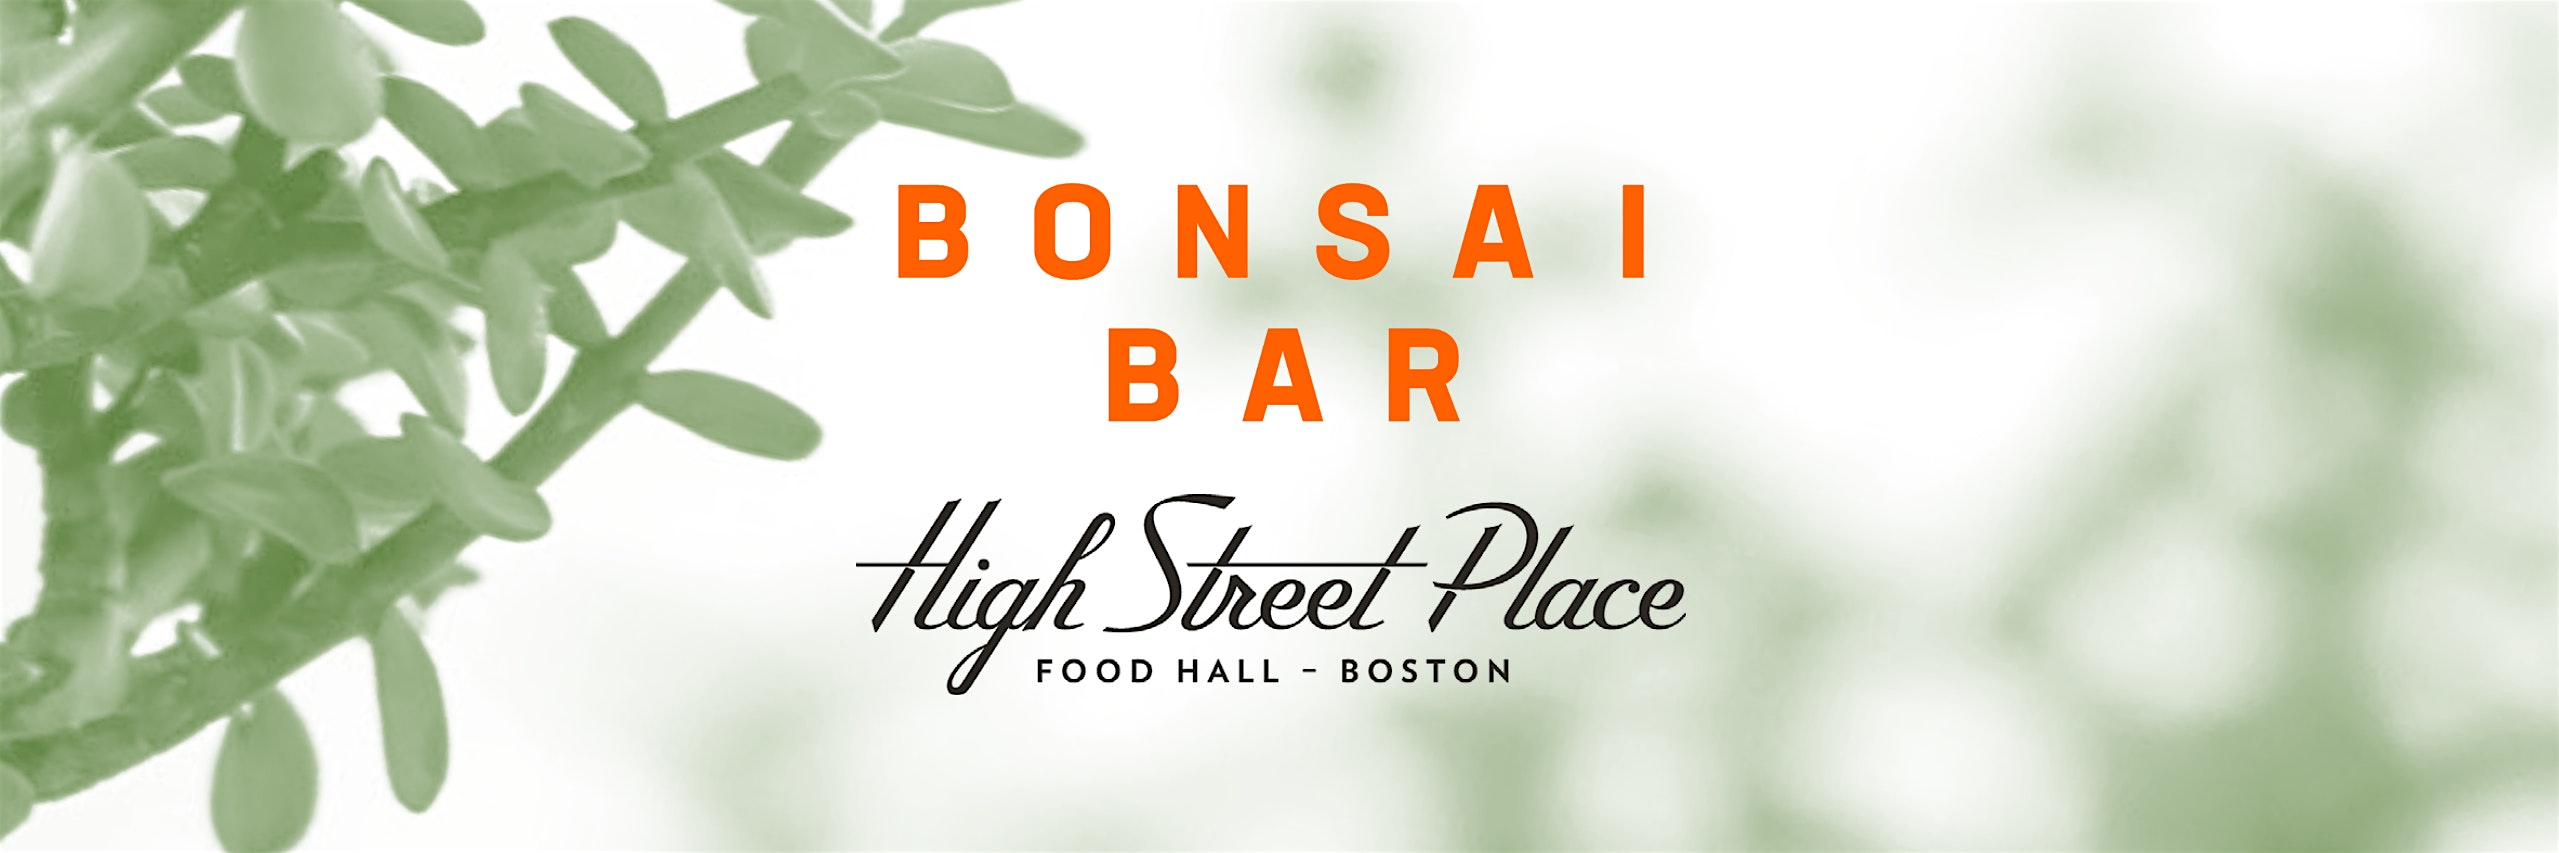 Bonsai Bar @ High Street Place – Food Hall